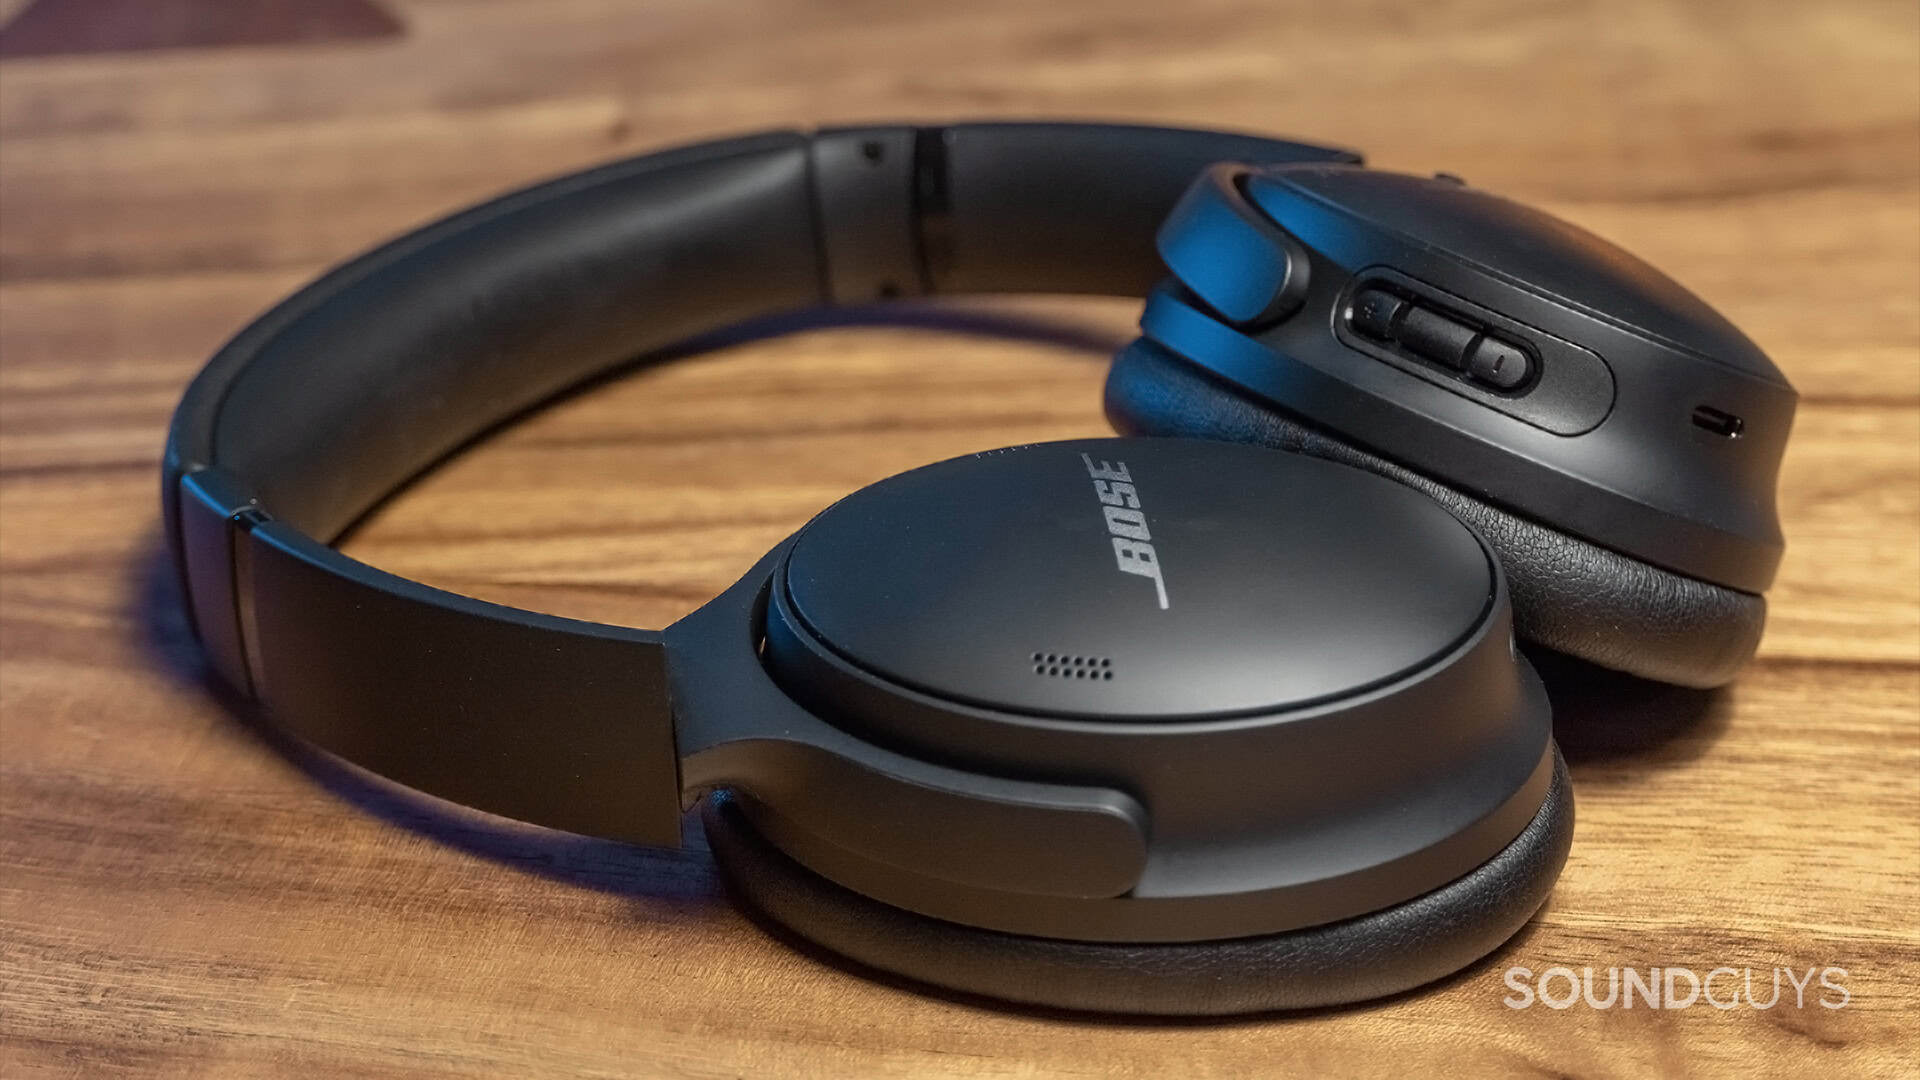 Bose Quietcomfort 45 headphones Black